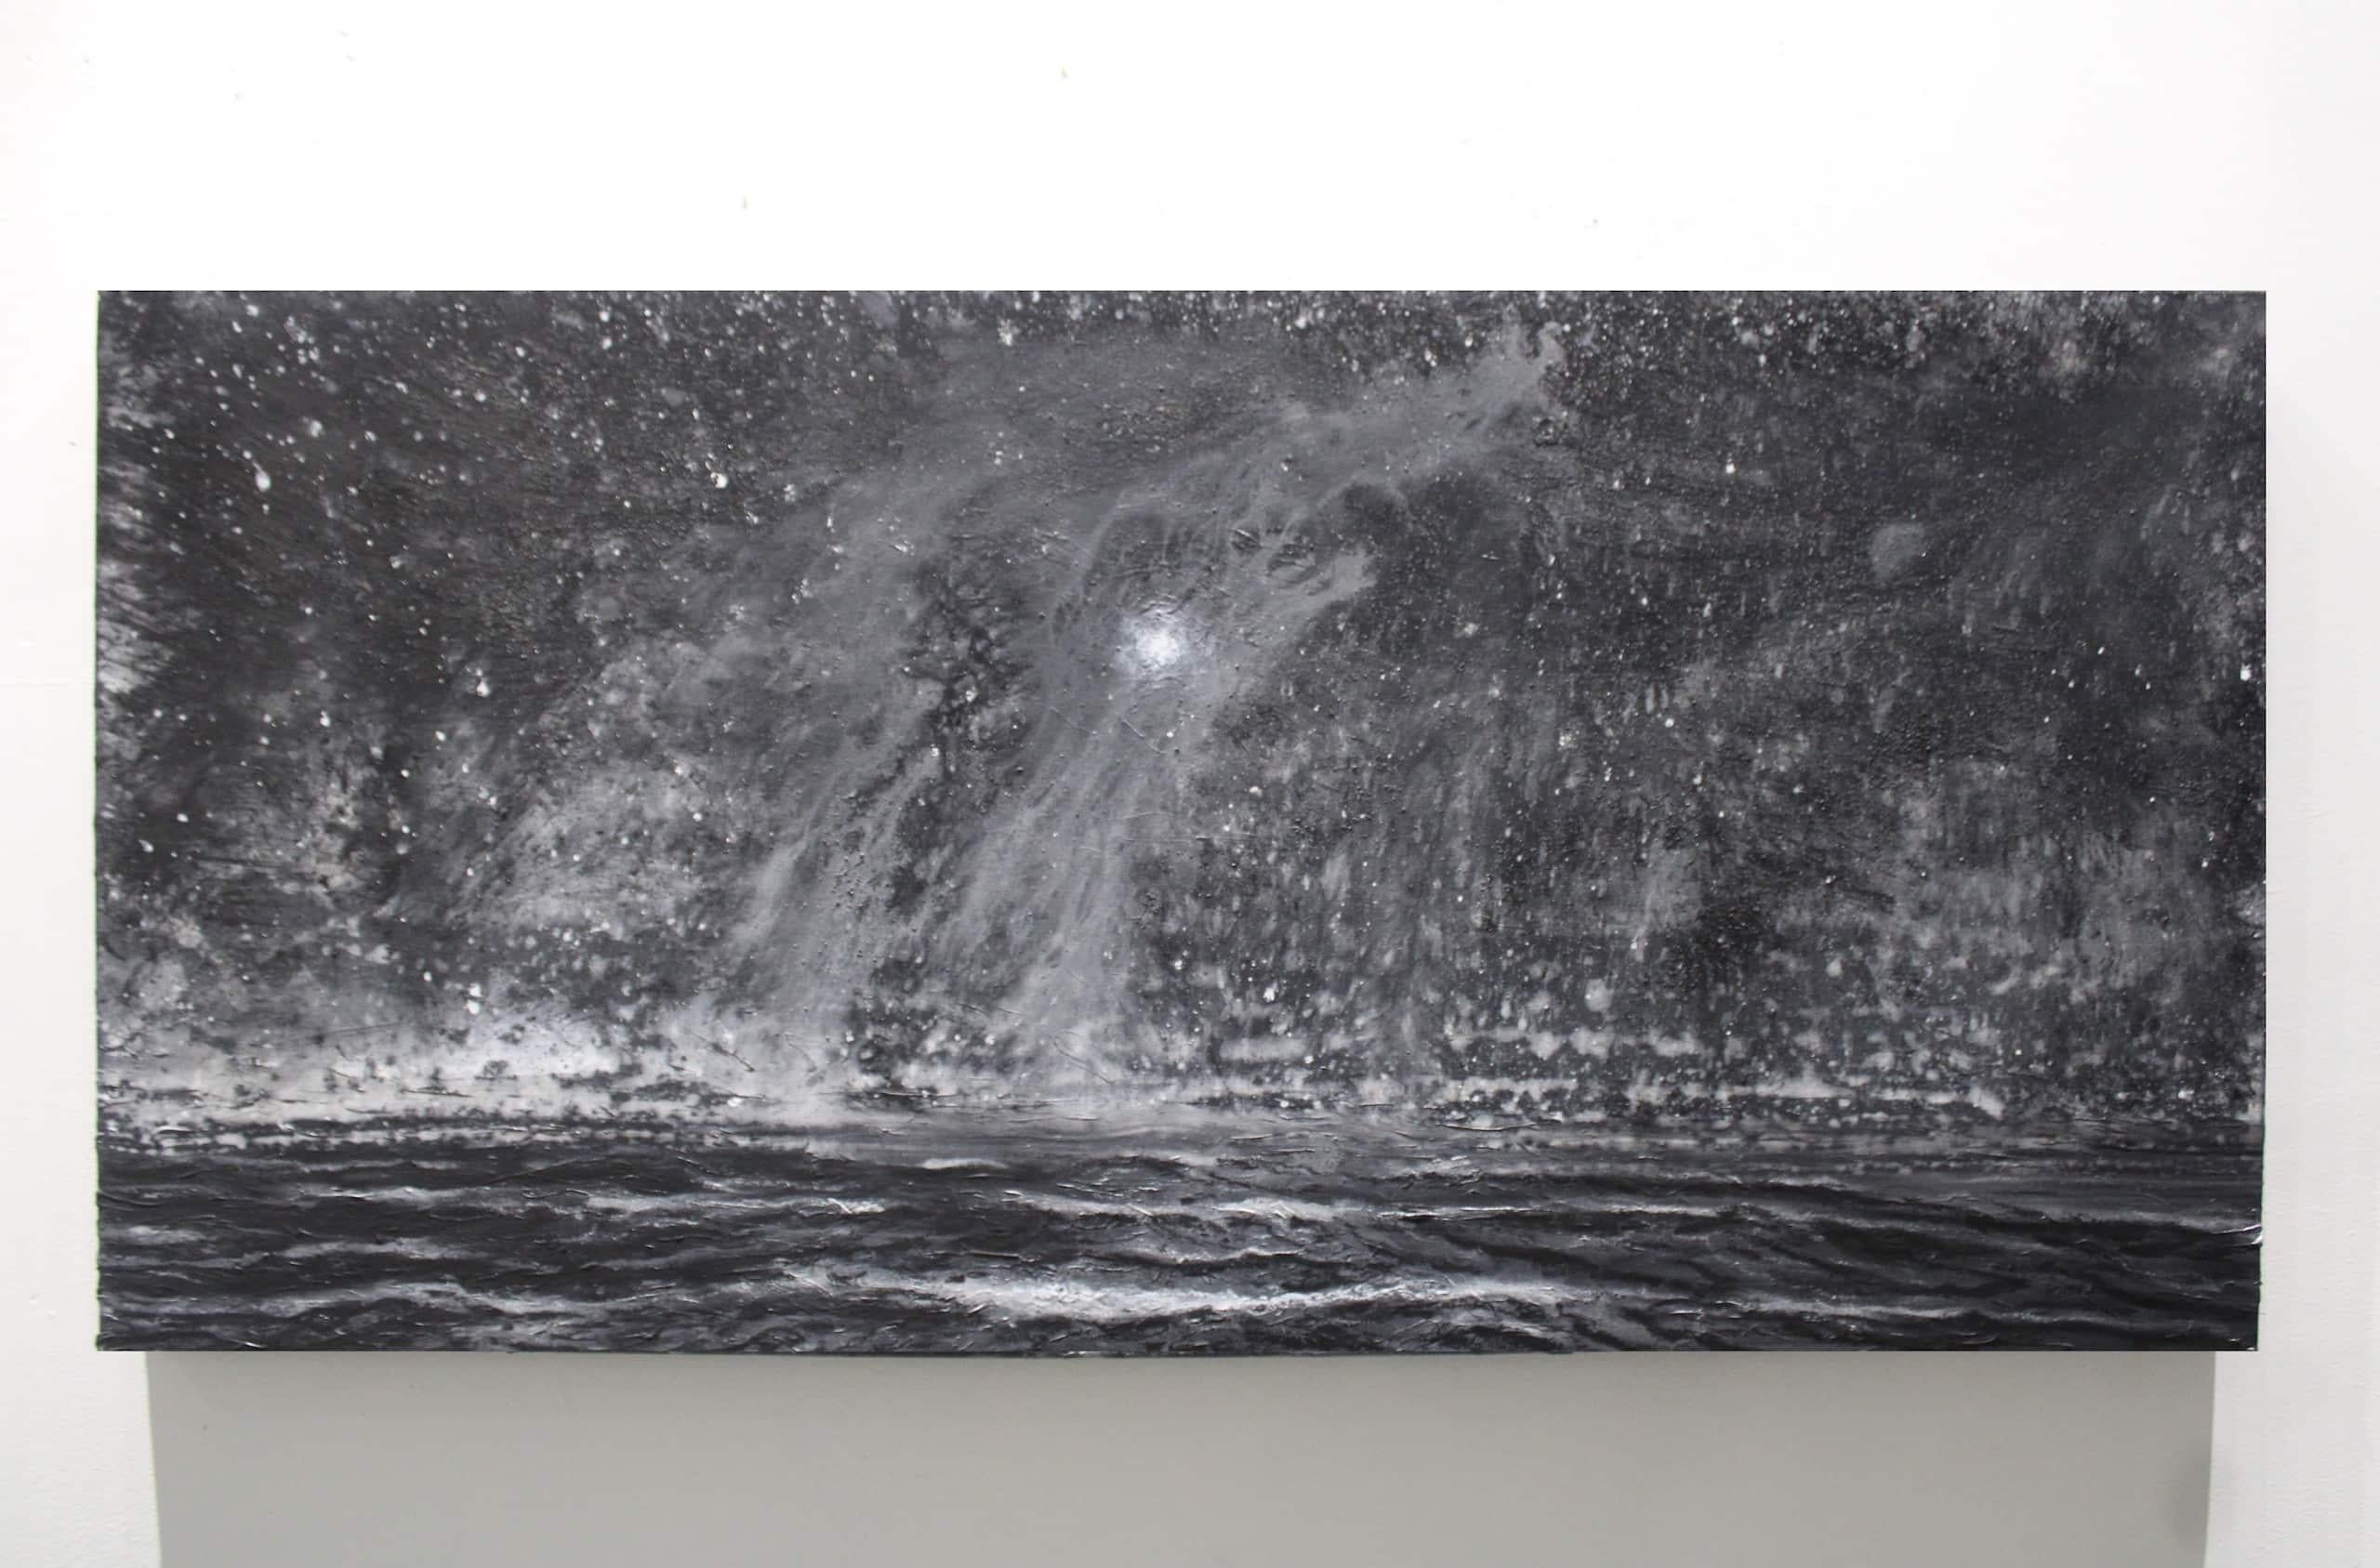 The deluge by Franco Salas Borquez - Black & white painting, ocean waves, sea For Sale 1